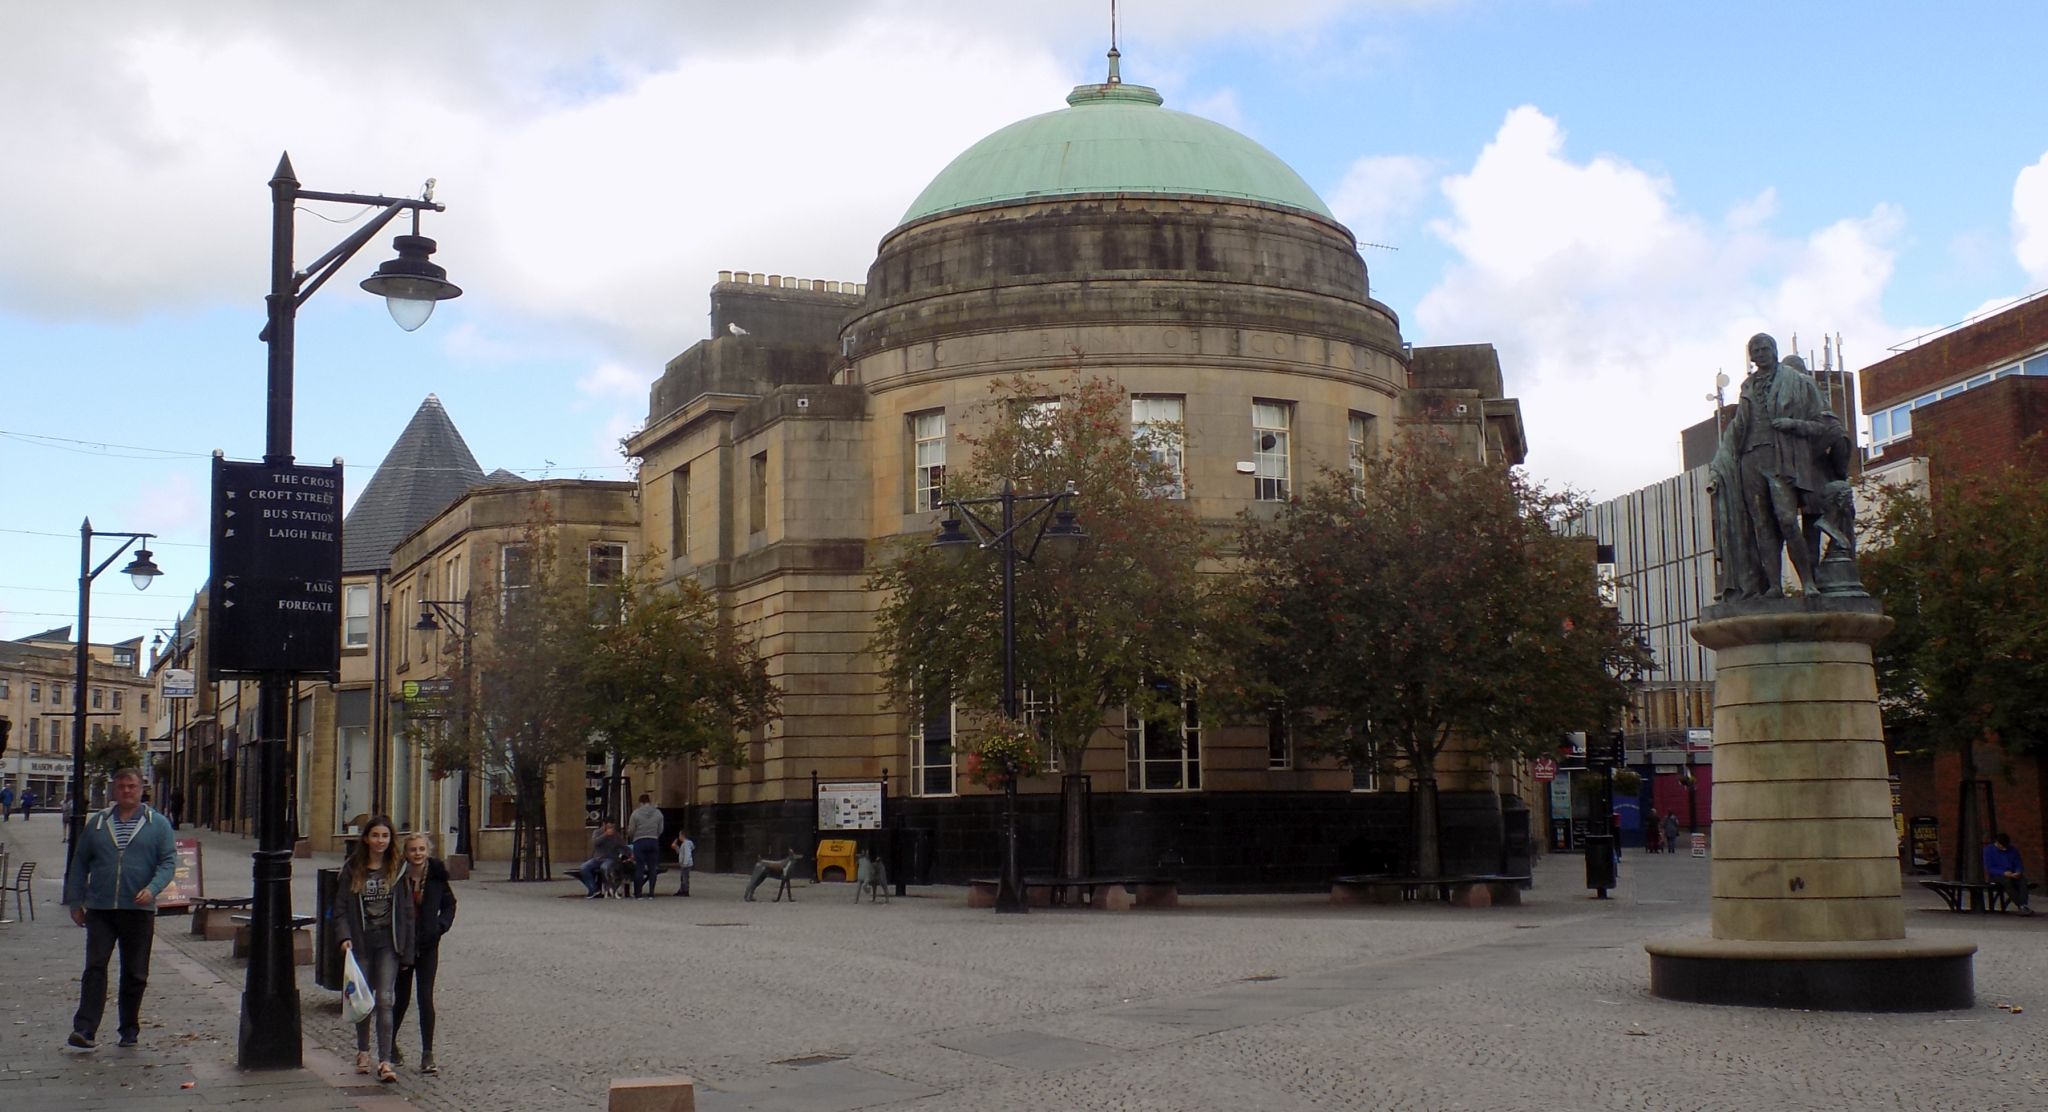 Former Royal Bank of Scotland Building and Robert Burns Statue at Kilmarnock Cross